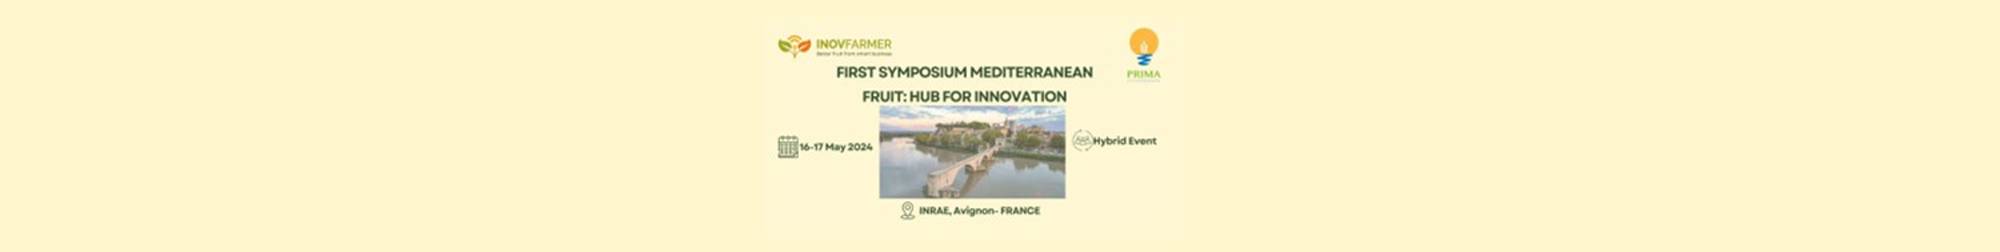 flyer du symposium Mediterranean fruit innovation